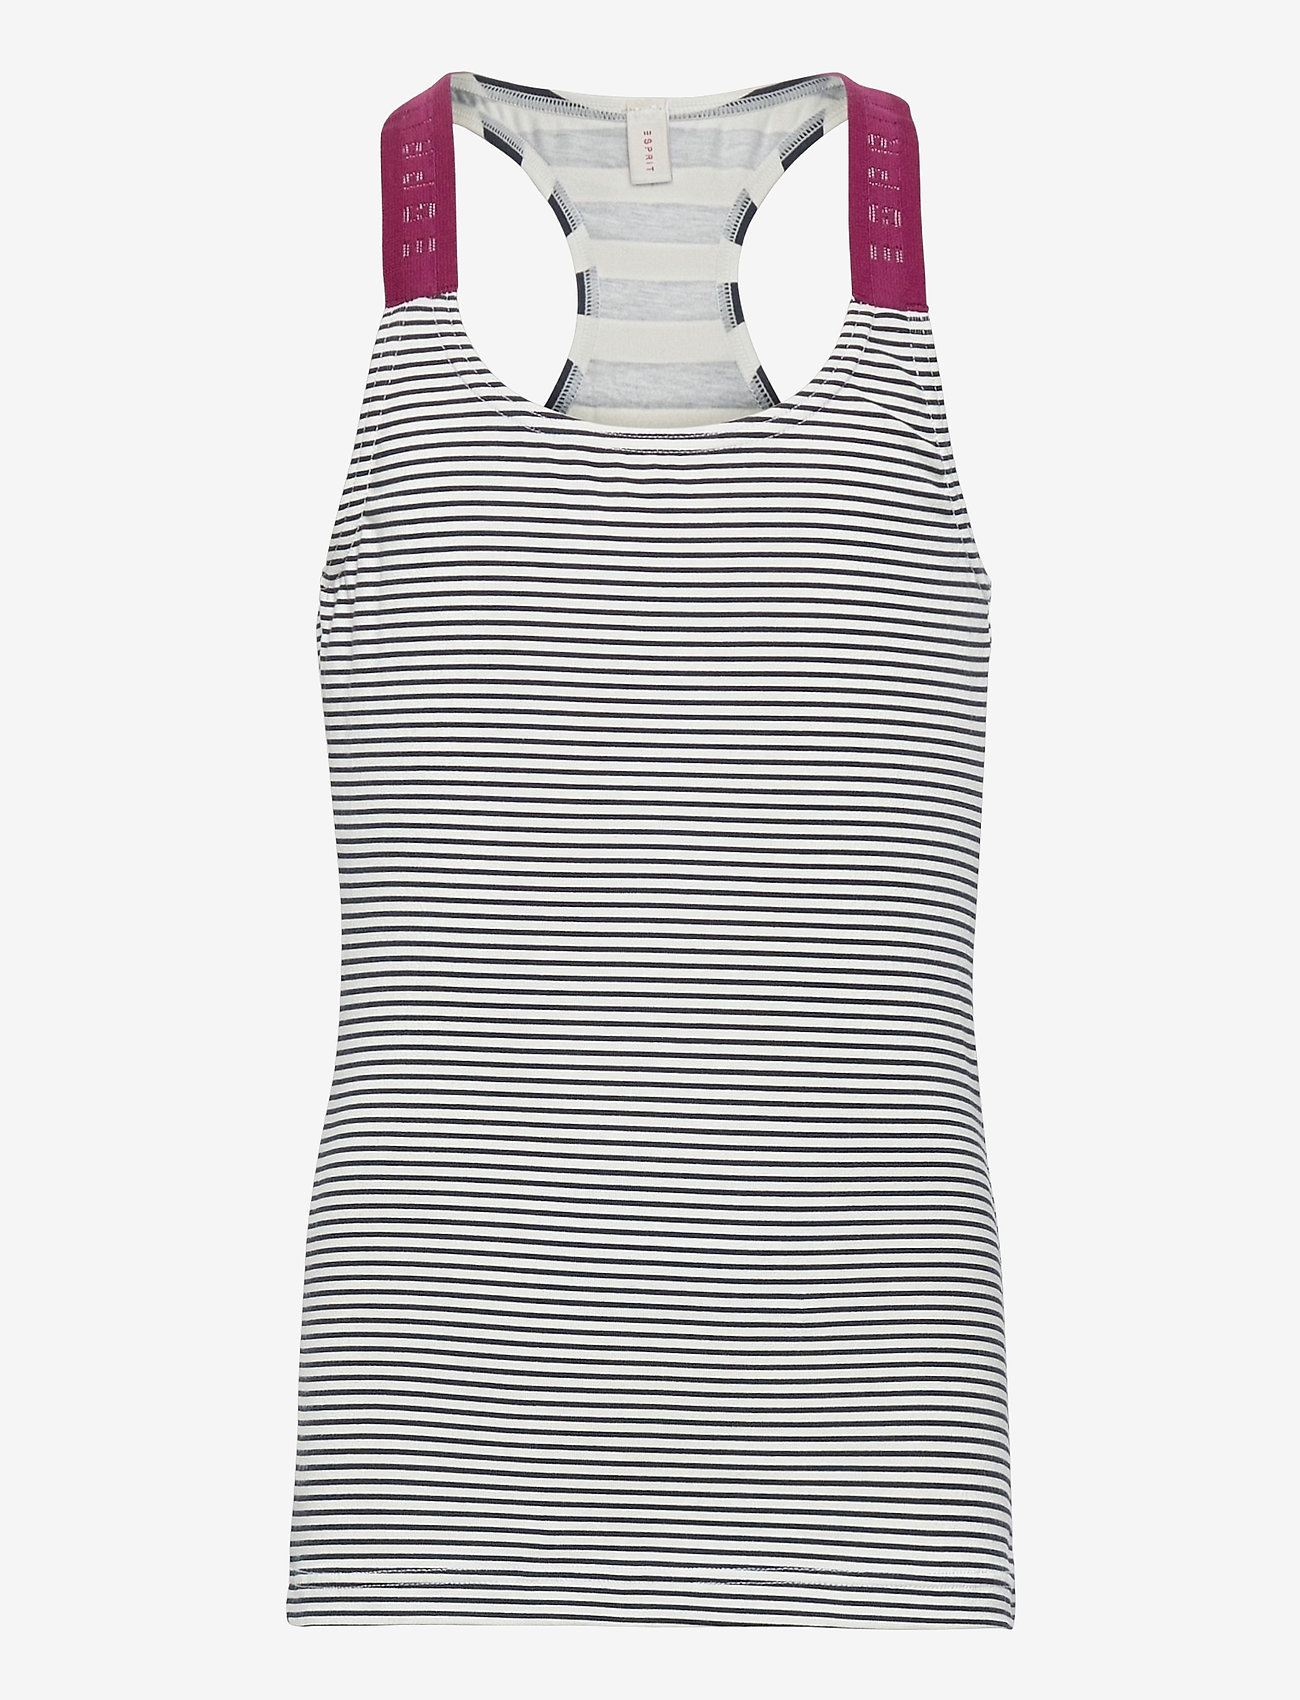 Esprit Bodywear Kids - Striped top made of stretch cotton - topit - navy - 0